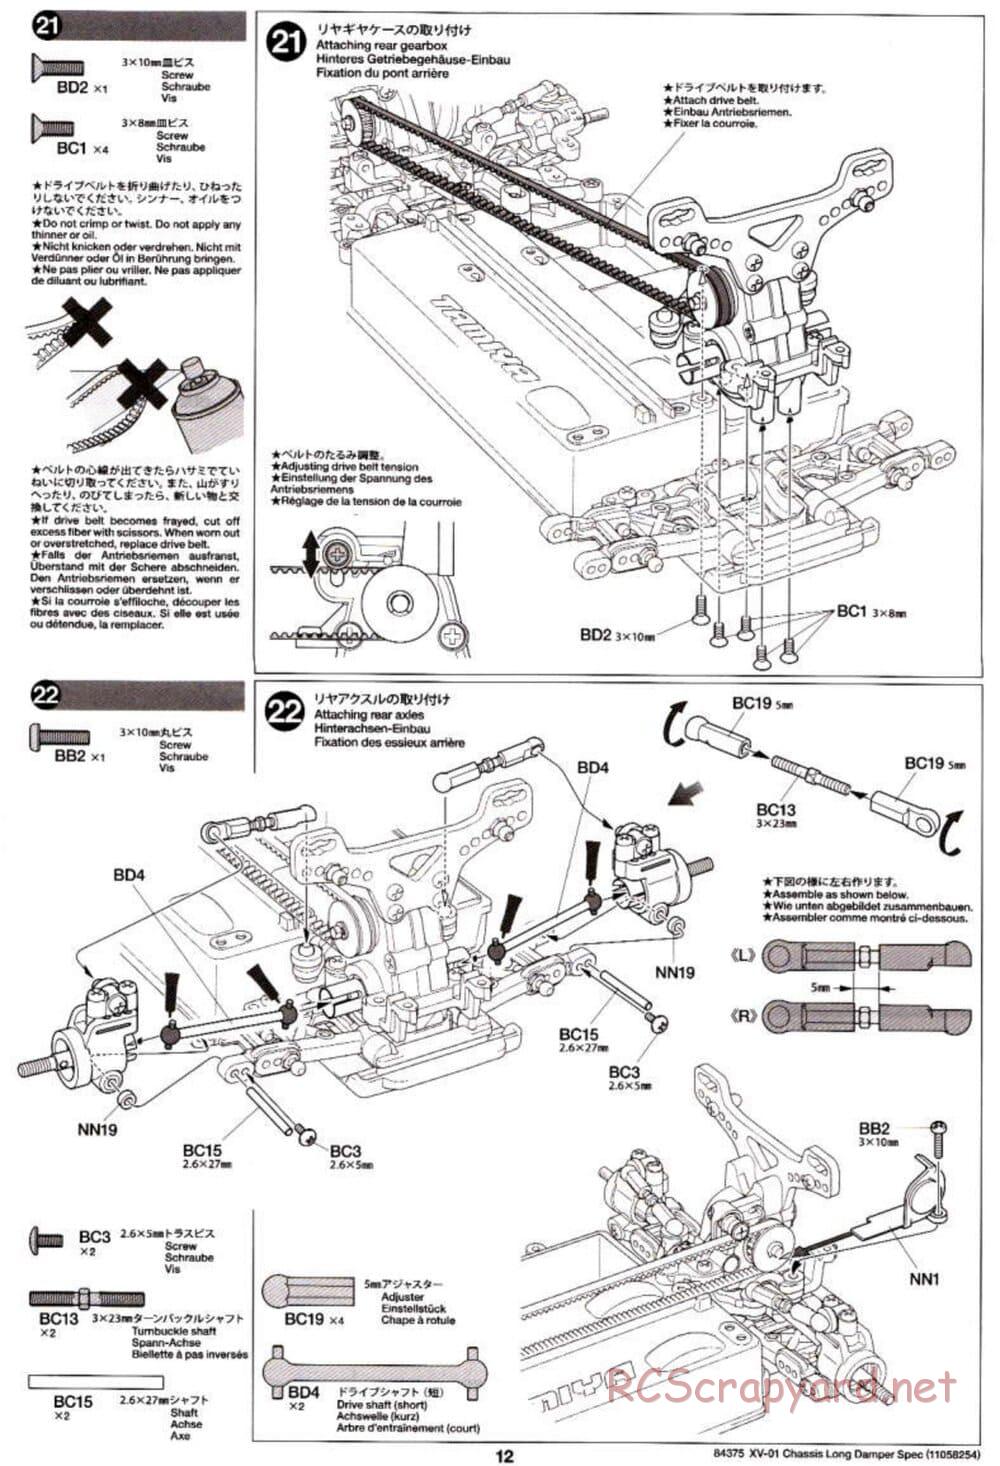 Tamiya - XV-01 Long Damper Spec Chassis - Manual - Page 12